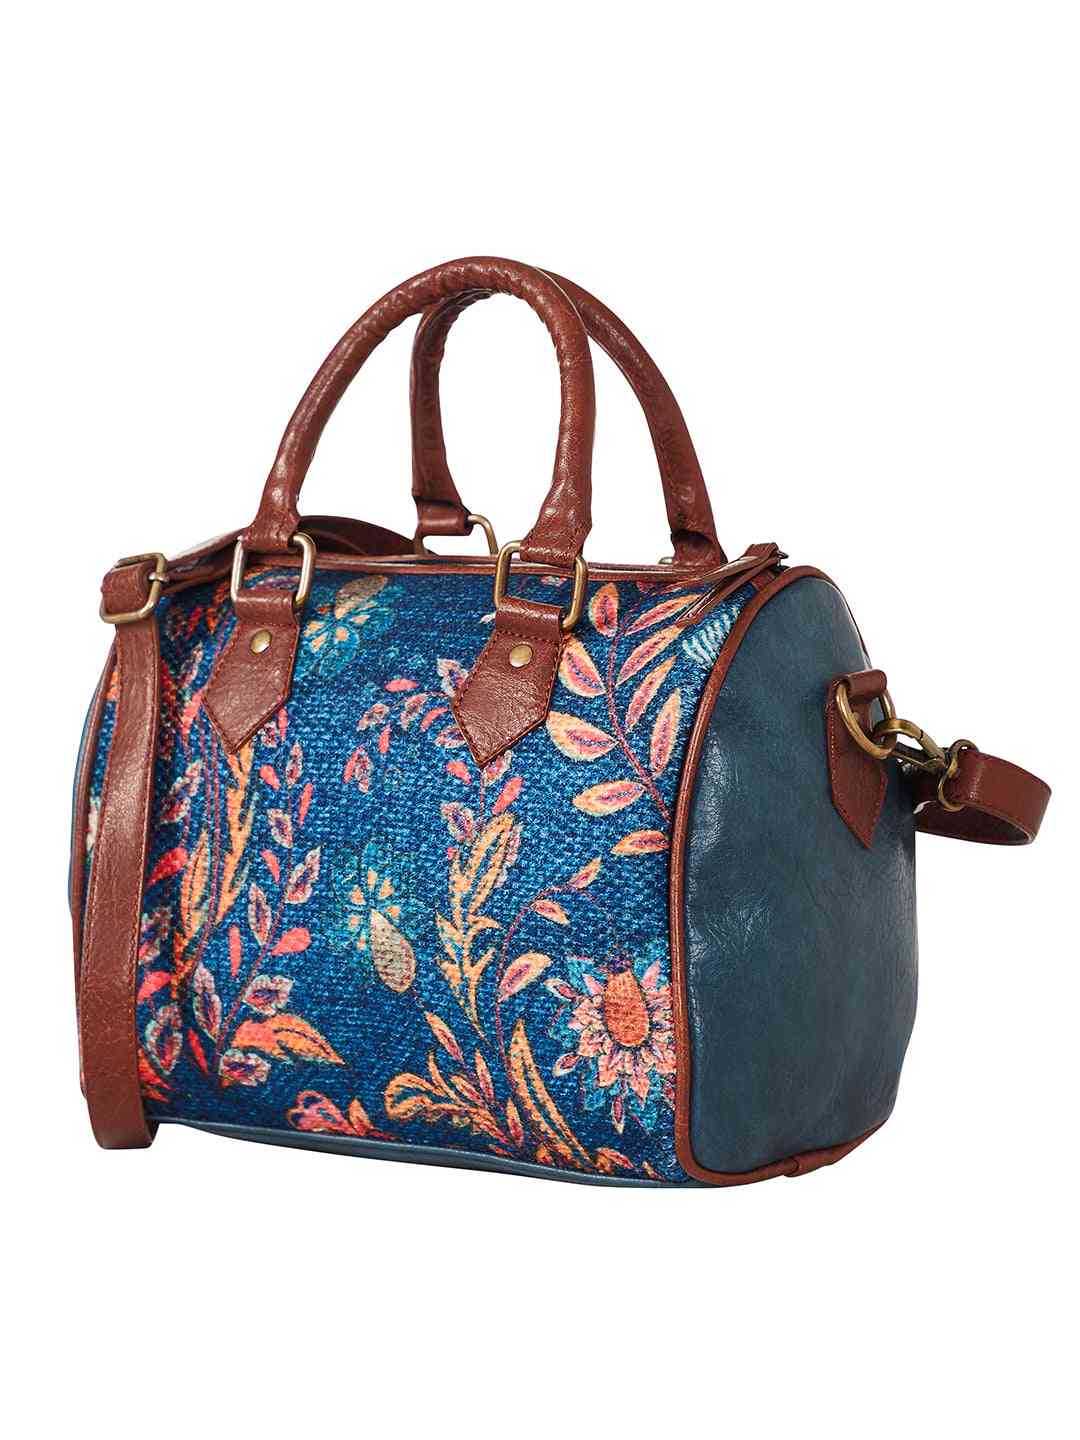 Mona-B Bag Mona B Canvas Small Vintage Handbag, Shoulder Bag, Crossbody Bag For Shopping, Travel With Stylish Design For Women (Blue, Kilim) - M-7004